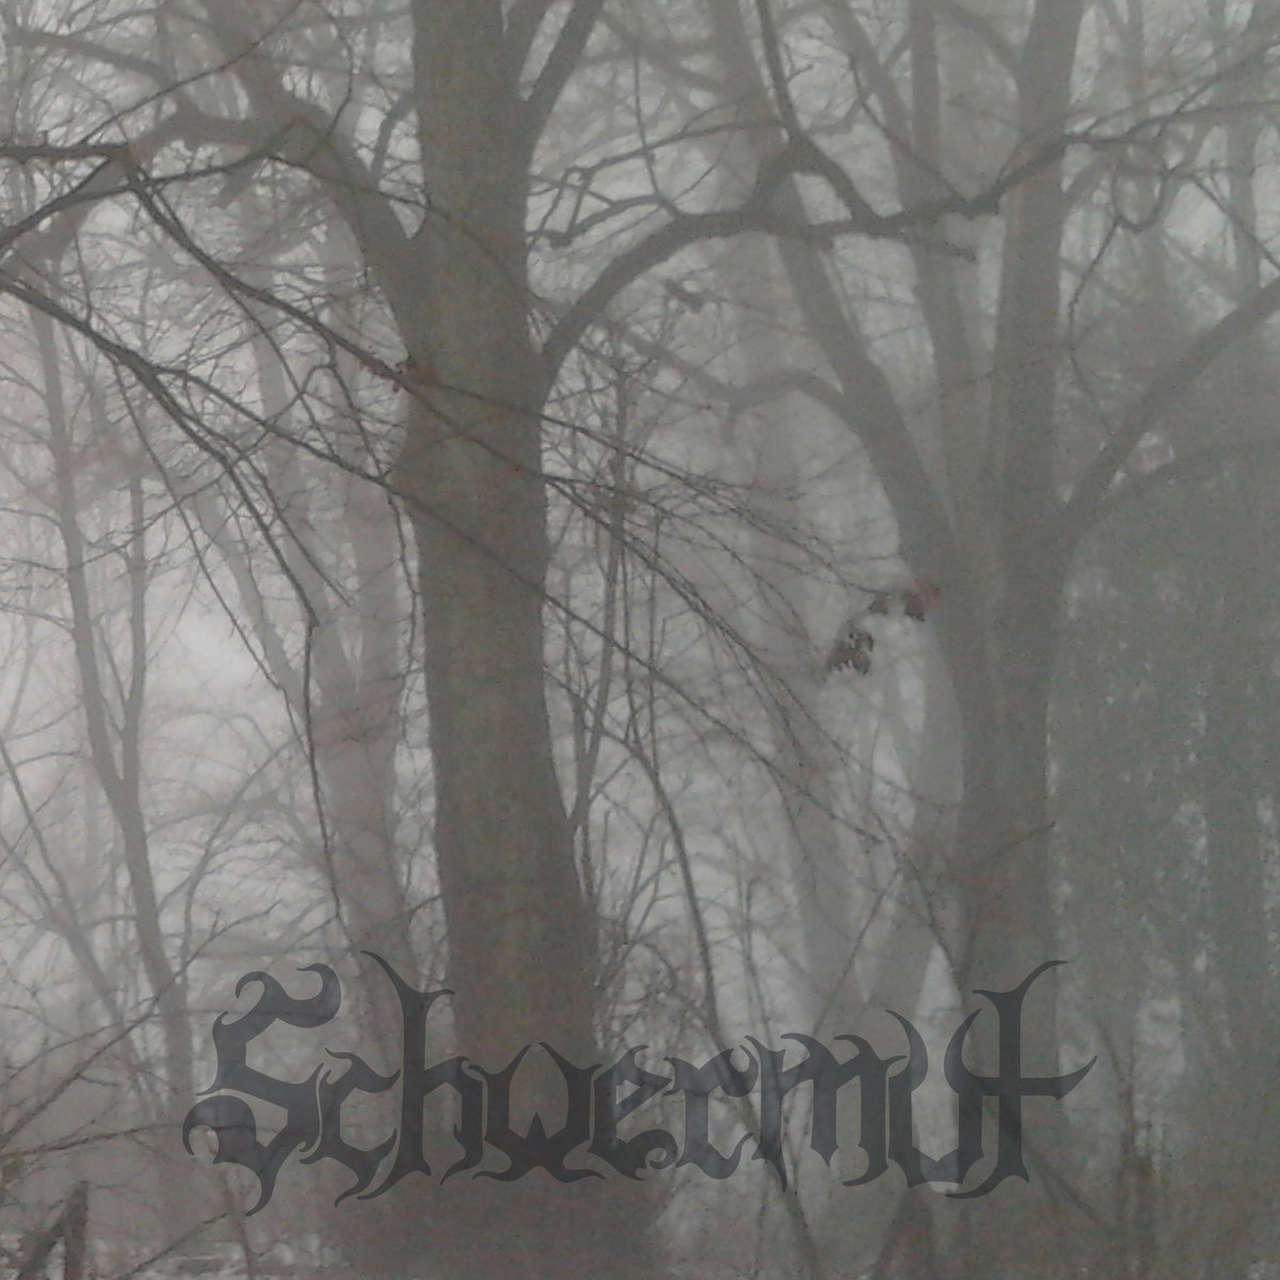 Schwermut - Schwermut (Digisleeve CD)